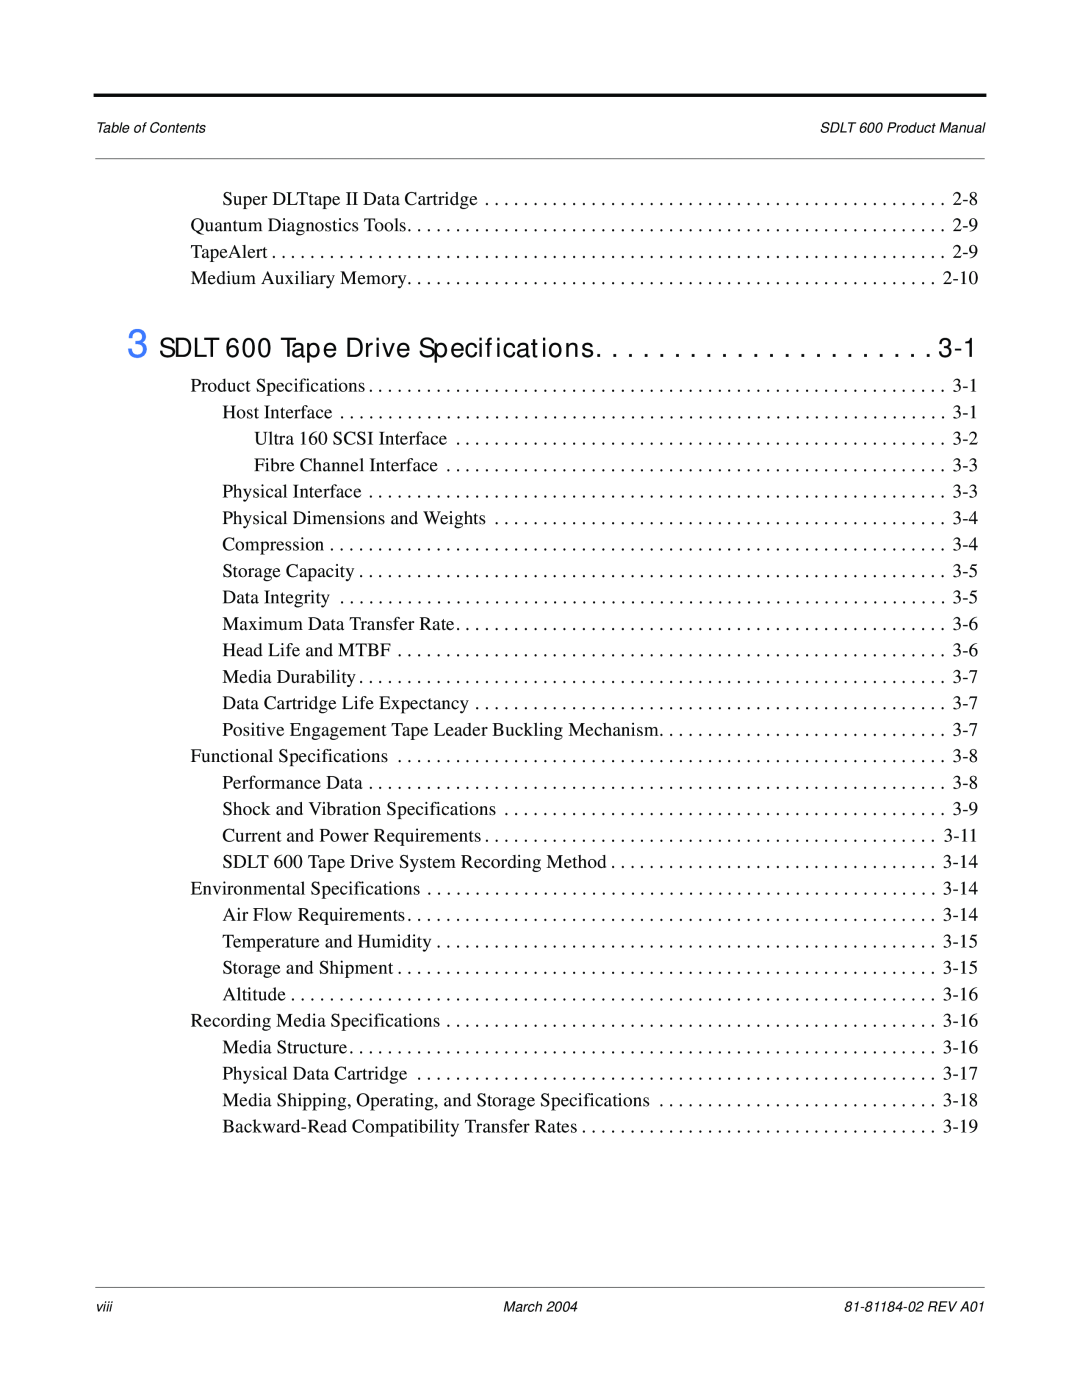 Tandberg Data manual SDLT 600 Tape Drive Specifications 